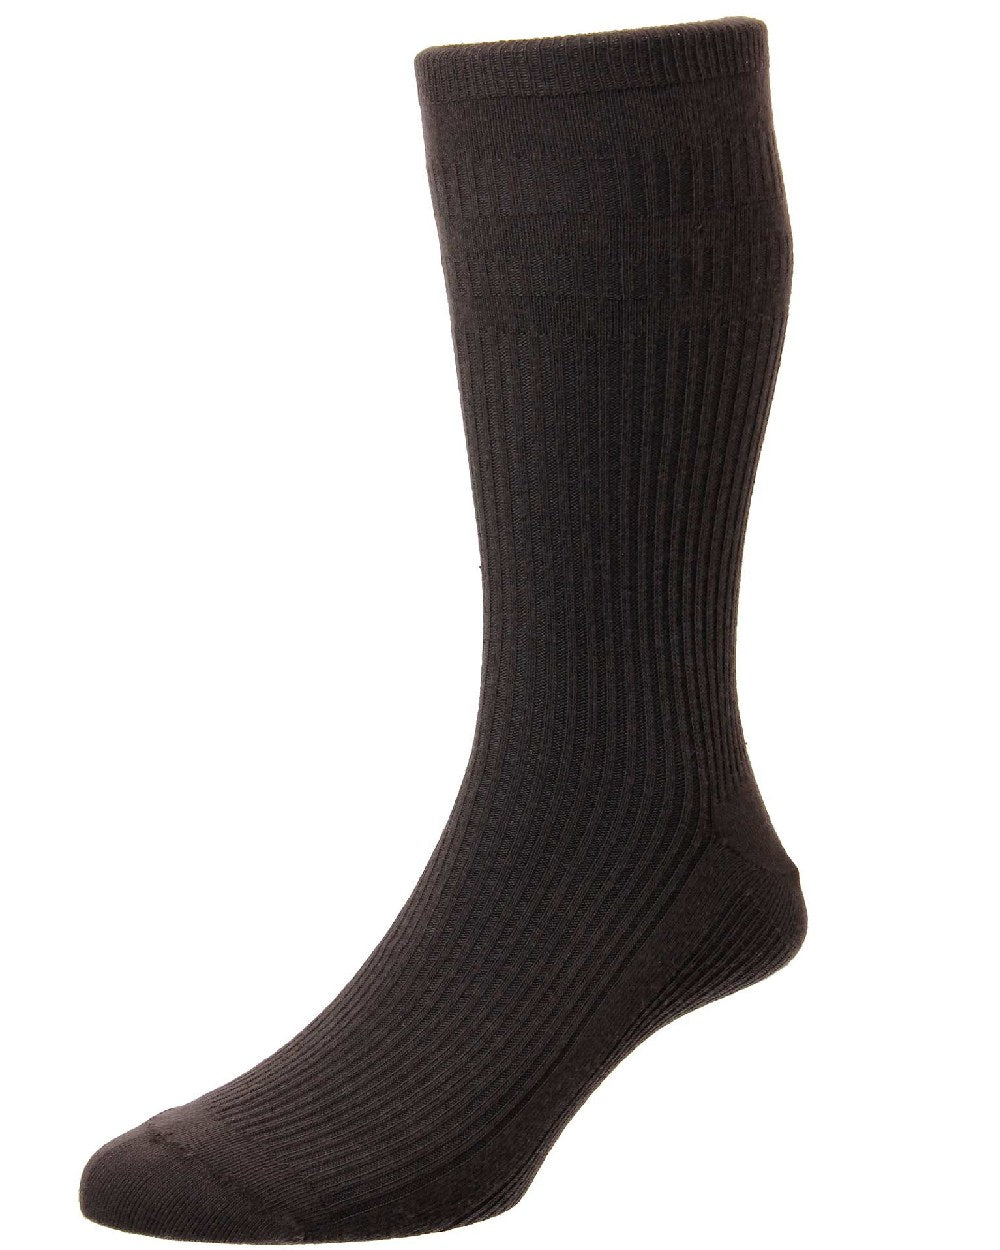 HJ Hall Original Cotton Soft Top Socks in Darrk Brown 